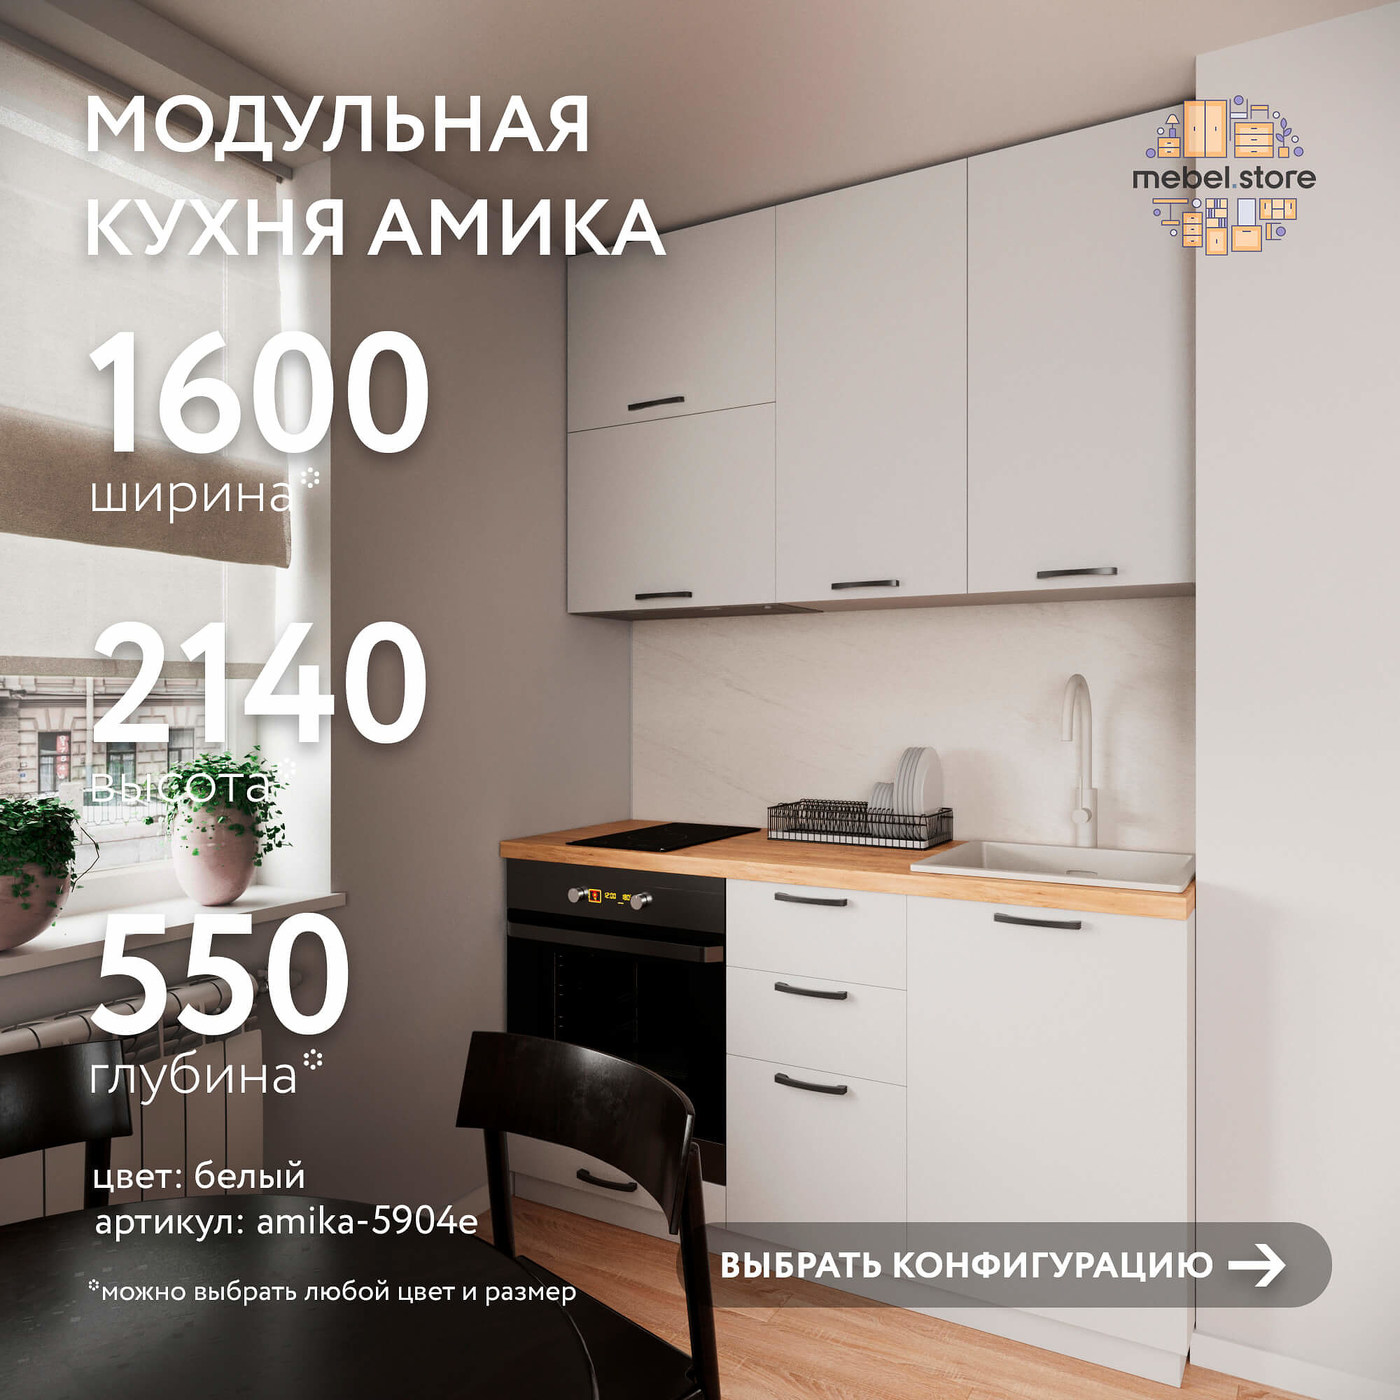 Модульная кухня Амика-5904e минимализм гарнитур - фото 1 large